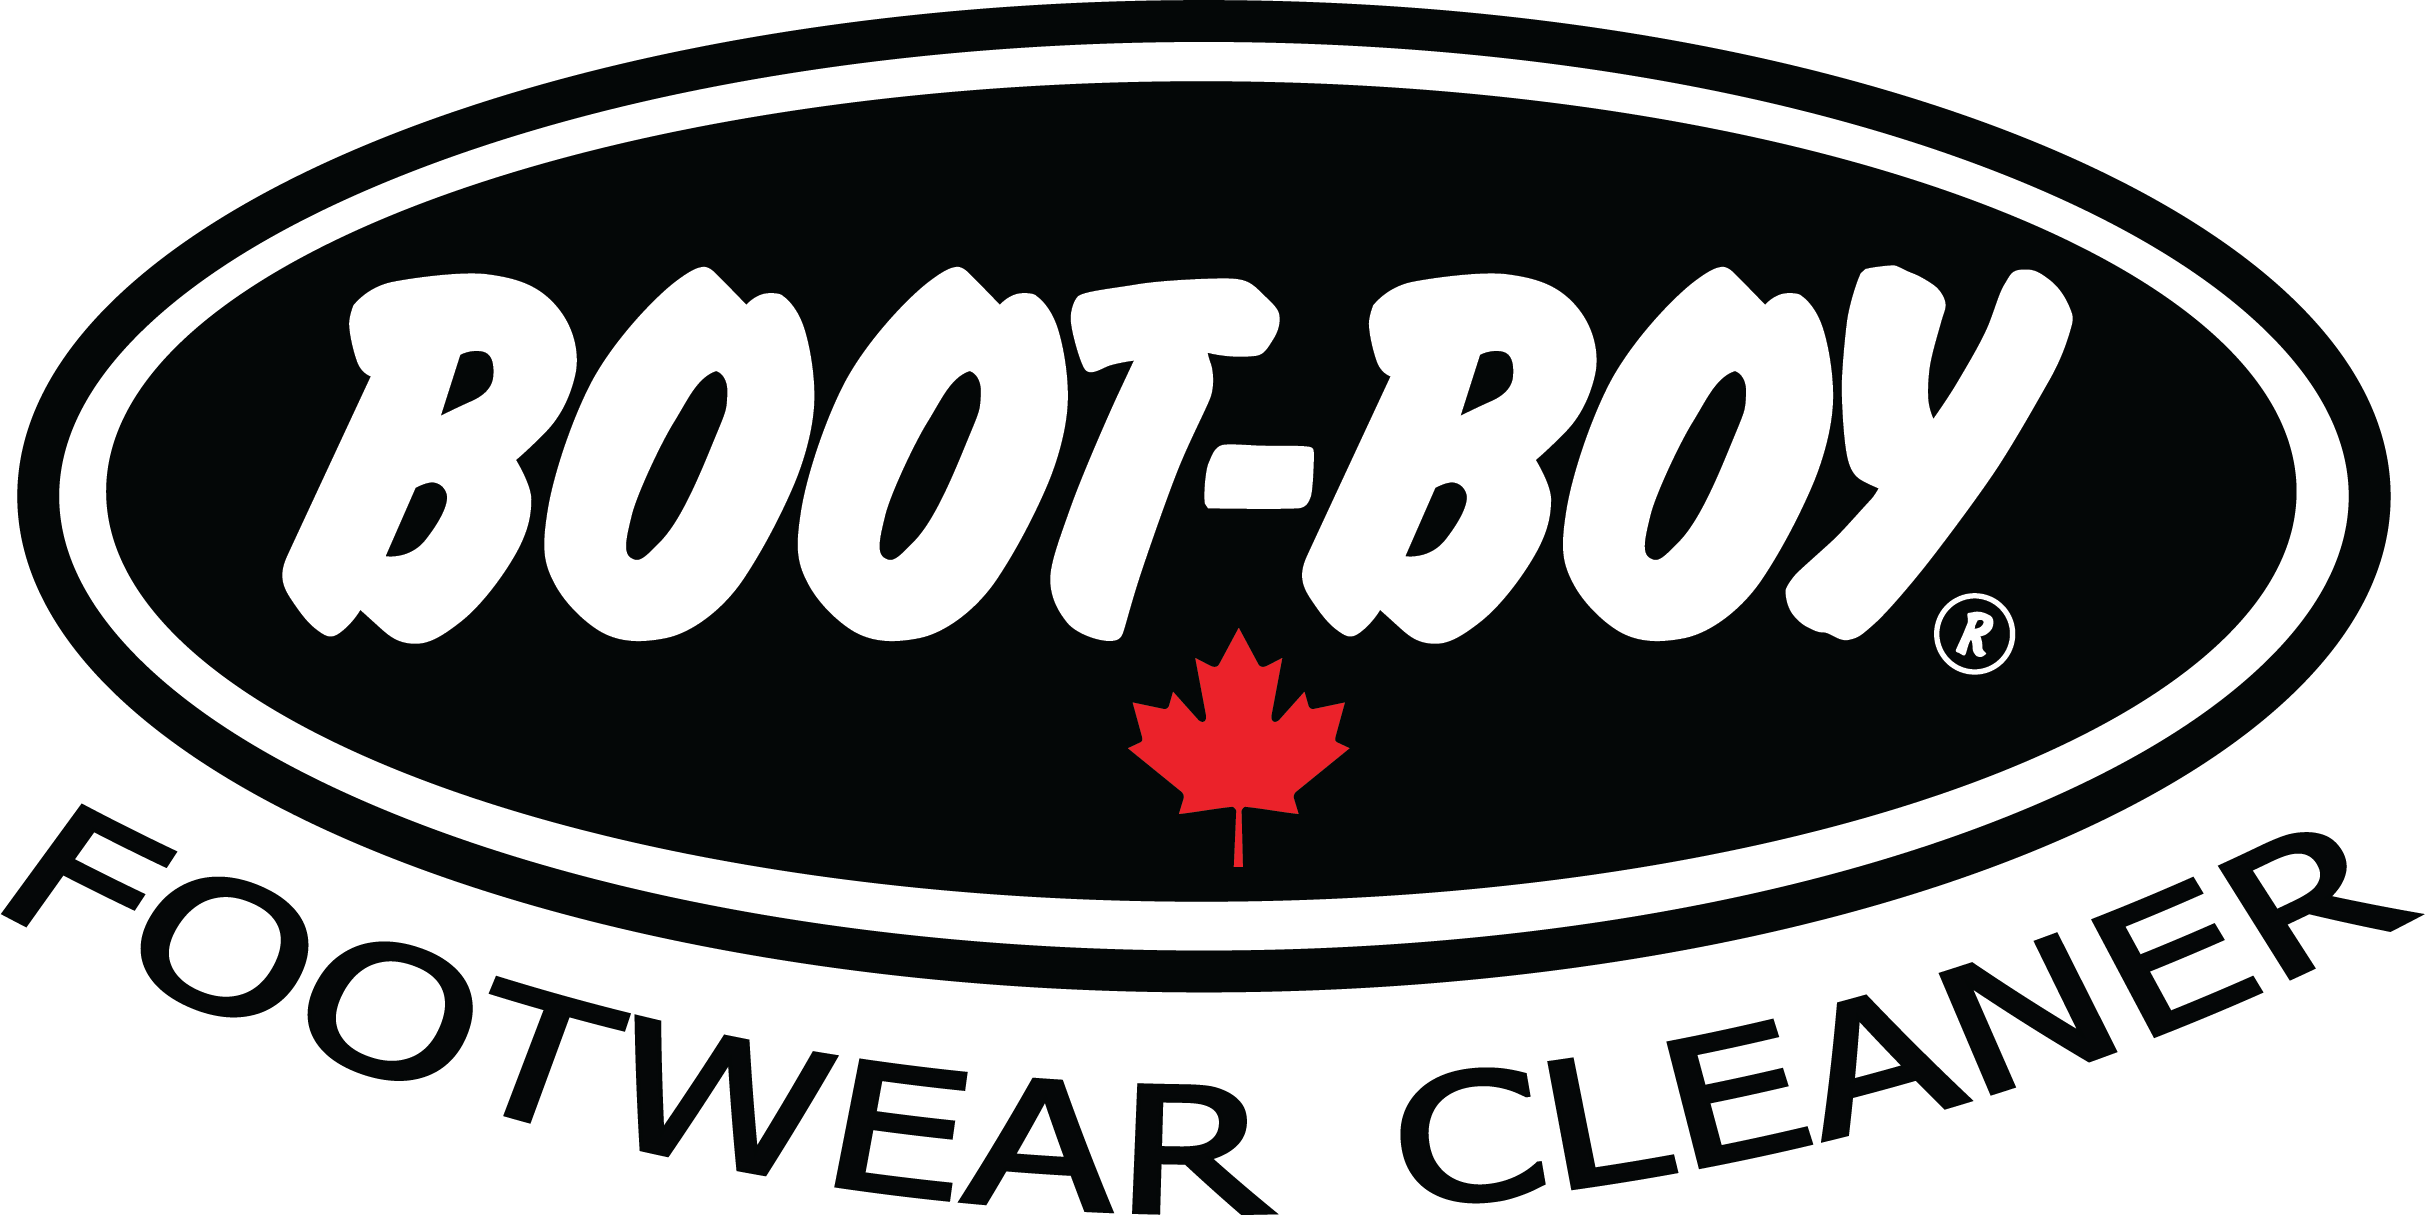 boot-boy-2021-logo-final.png